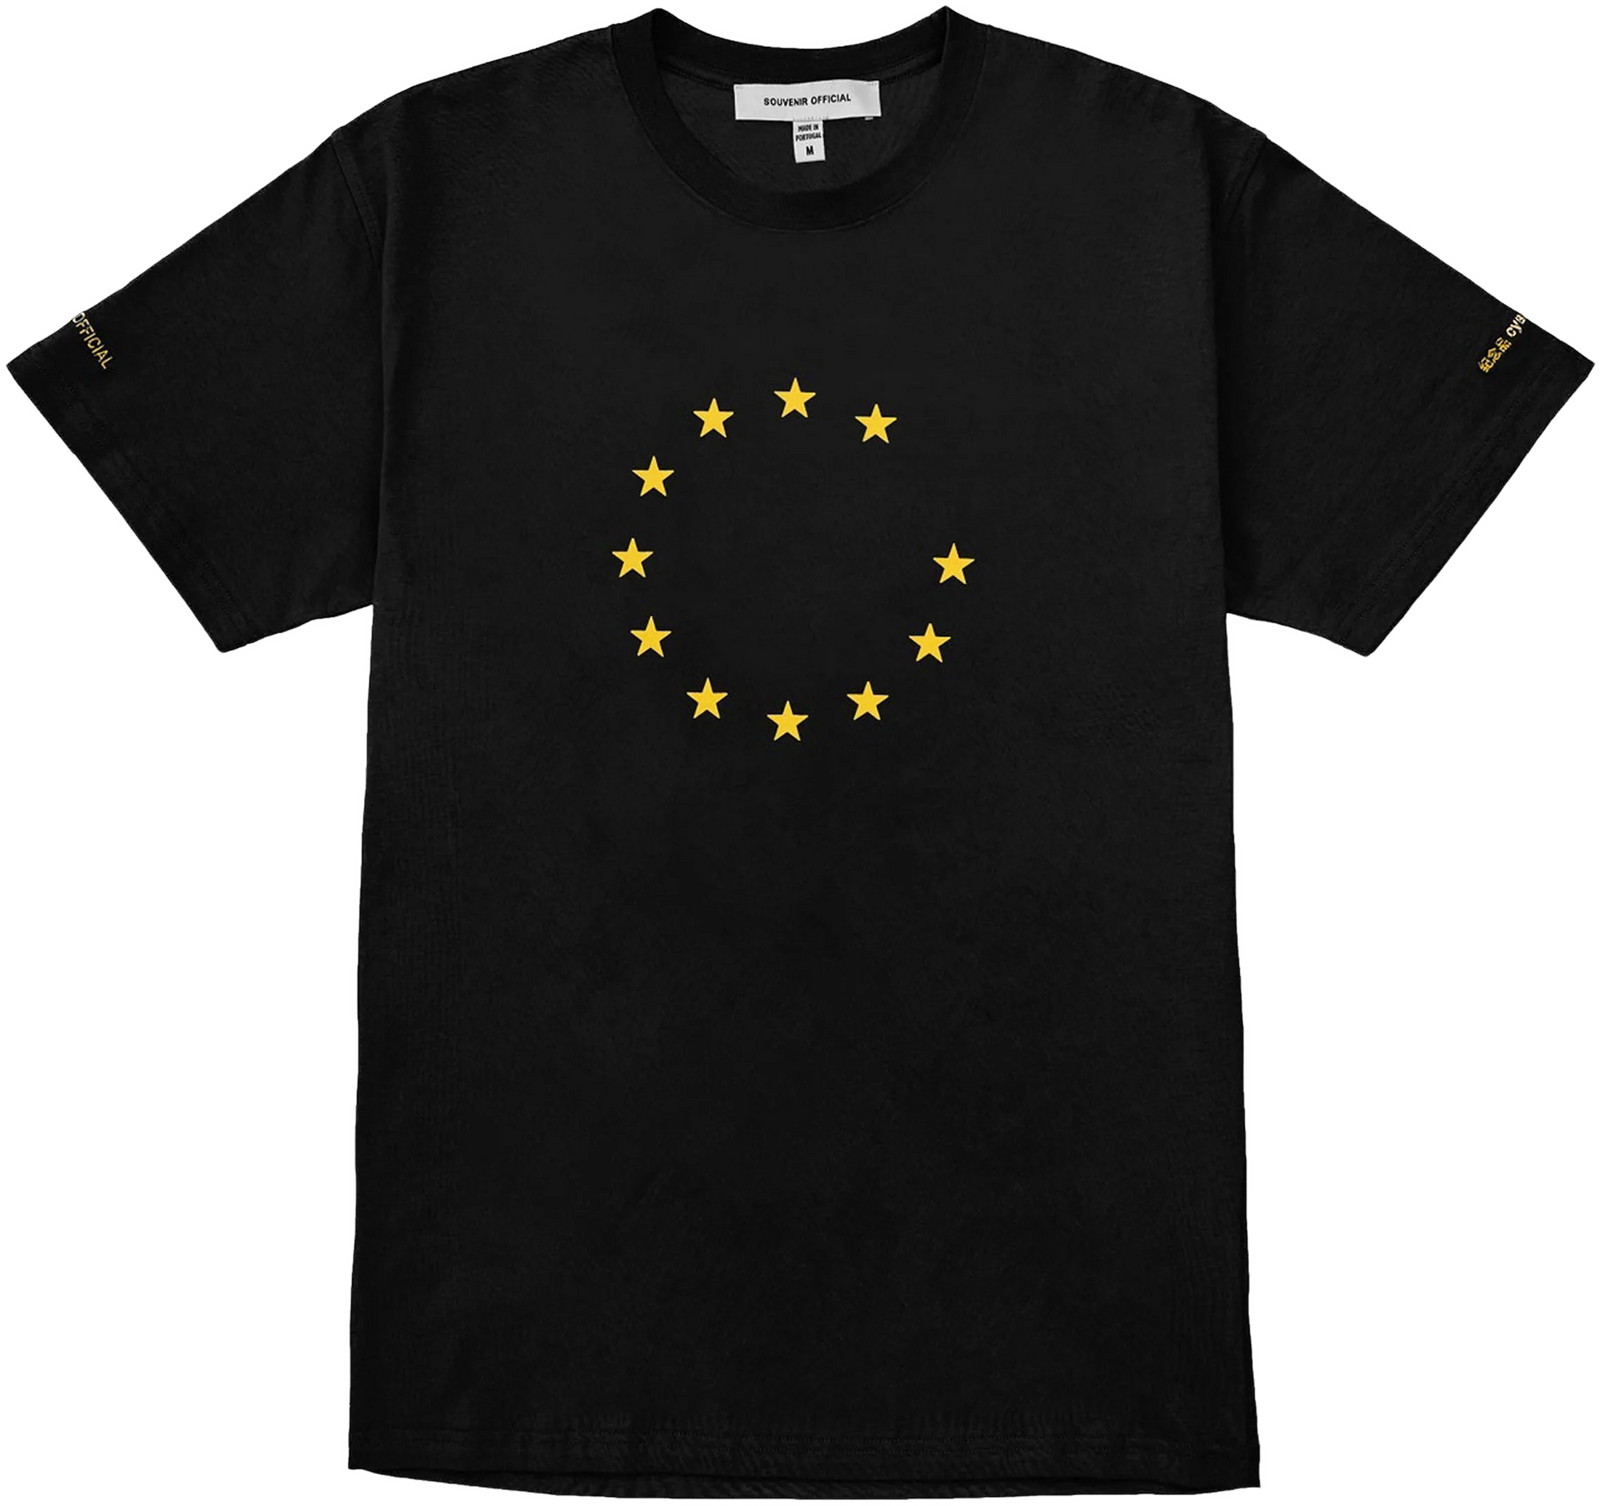 EUnify T-Shirt Black